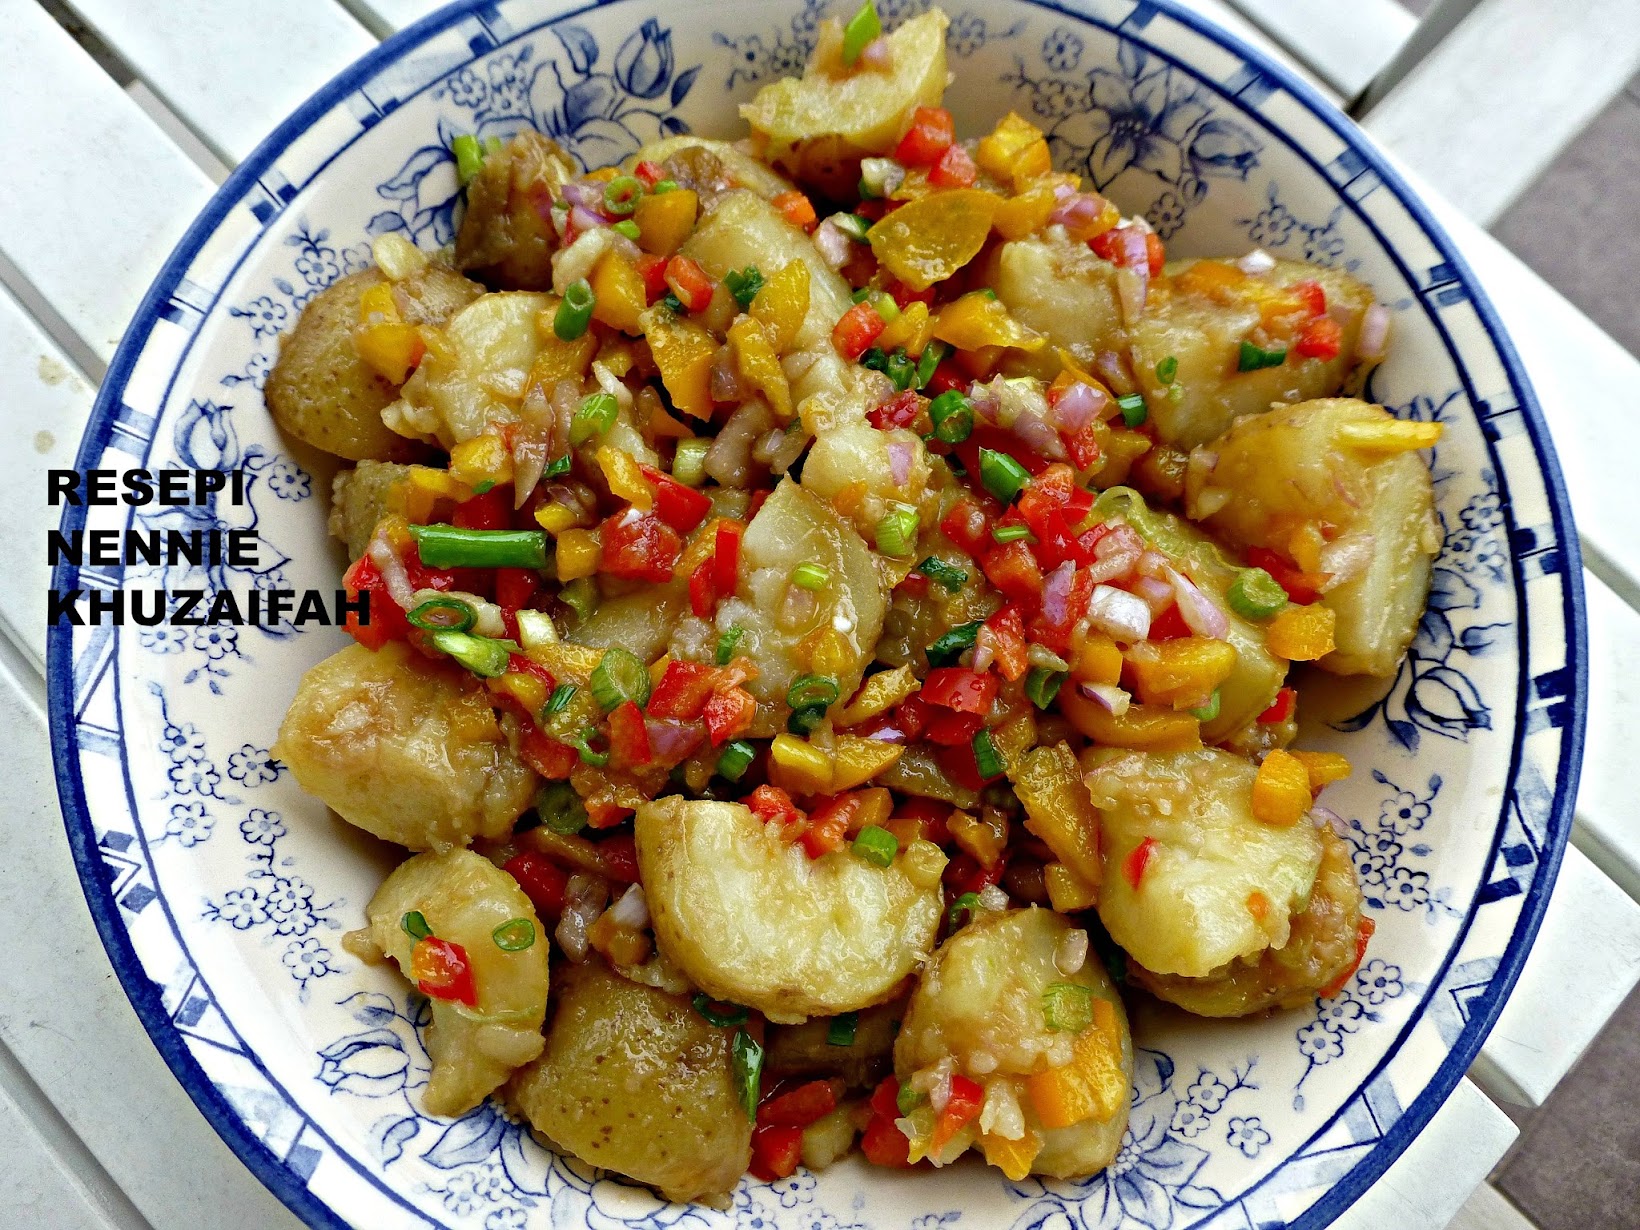 RESEPI NENNIE KHUZAIFAH: Salad ubi kentang chat